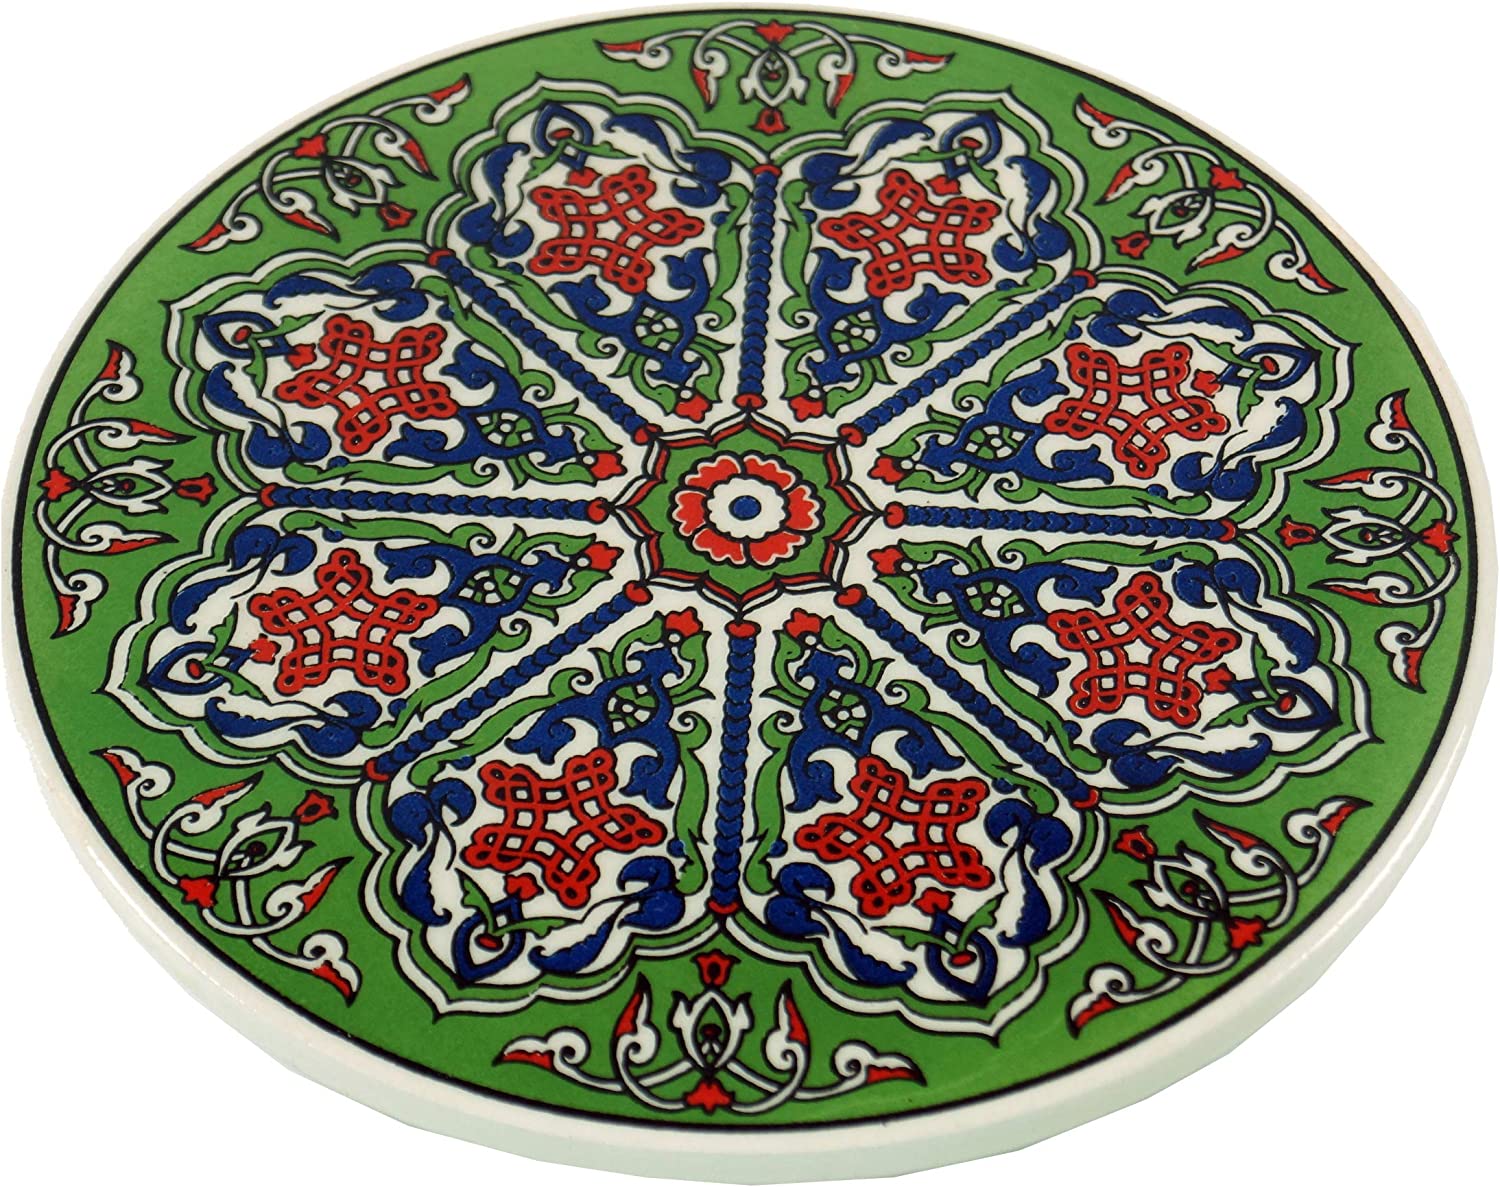 GURU SHOP Oriental Ceramic Coasters, Round Coasters for Glasses, Cups with Mandala Motif Set - Pattern 10, Green, Set of 6, Coasters, Trays